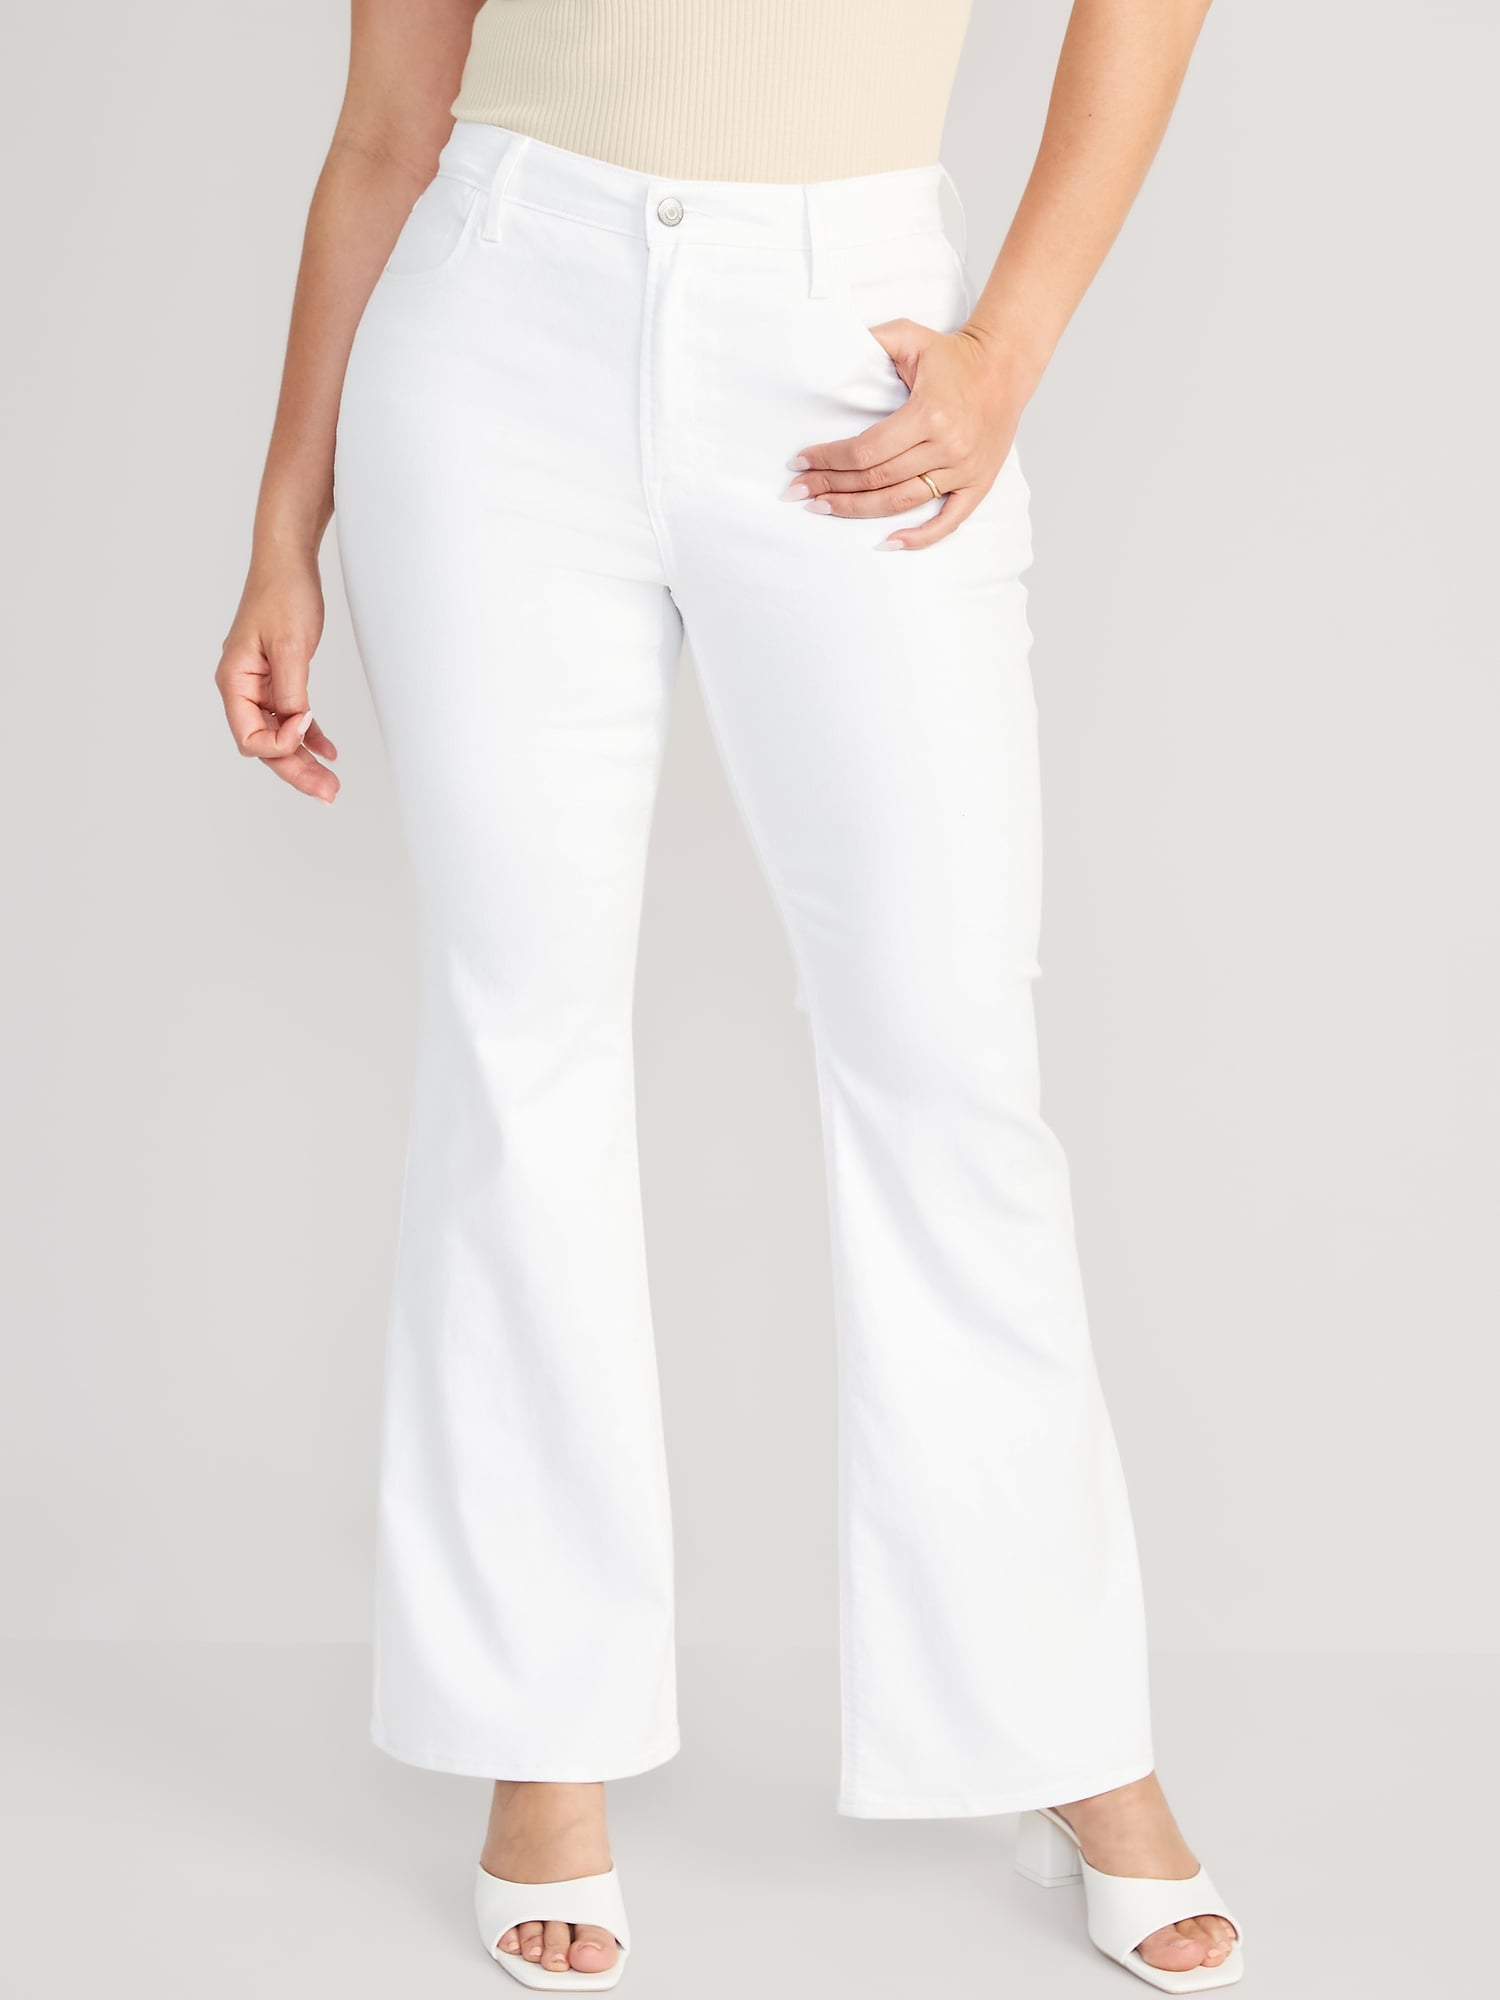 Buy Flare Pants High Waist White online